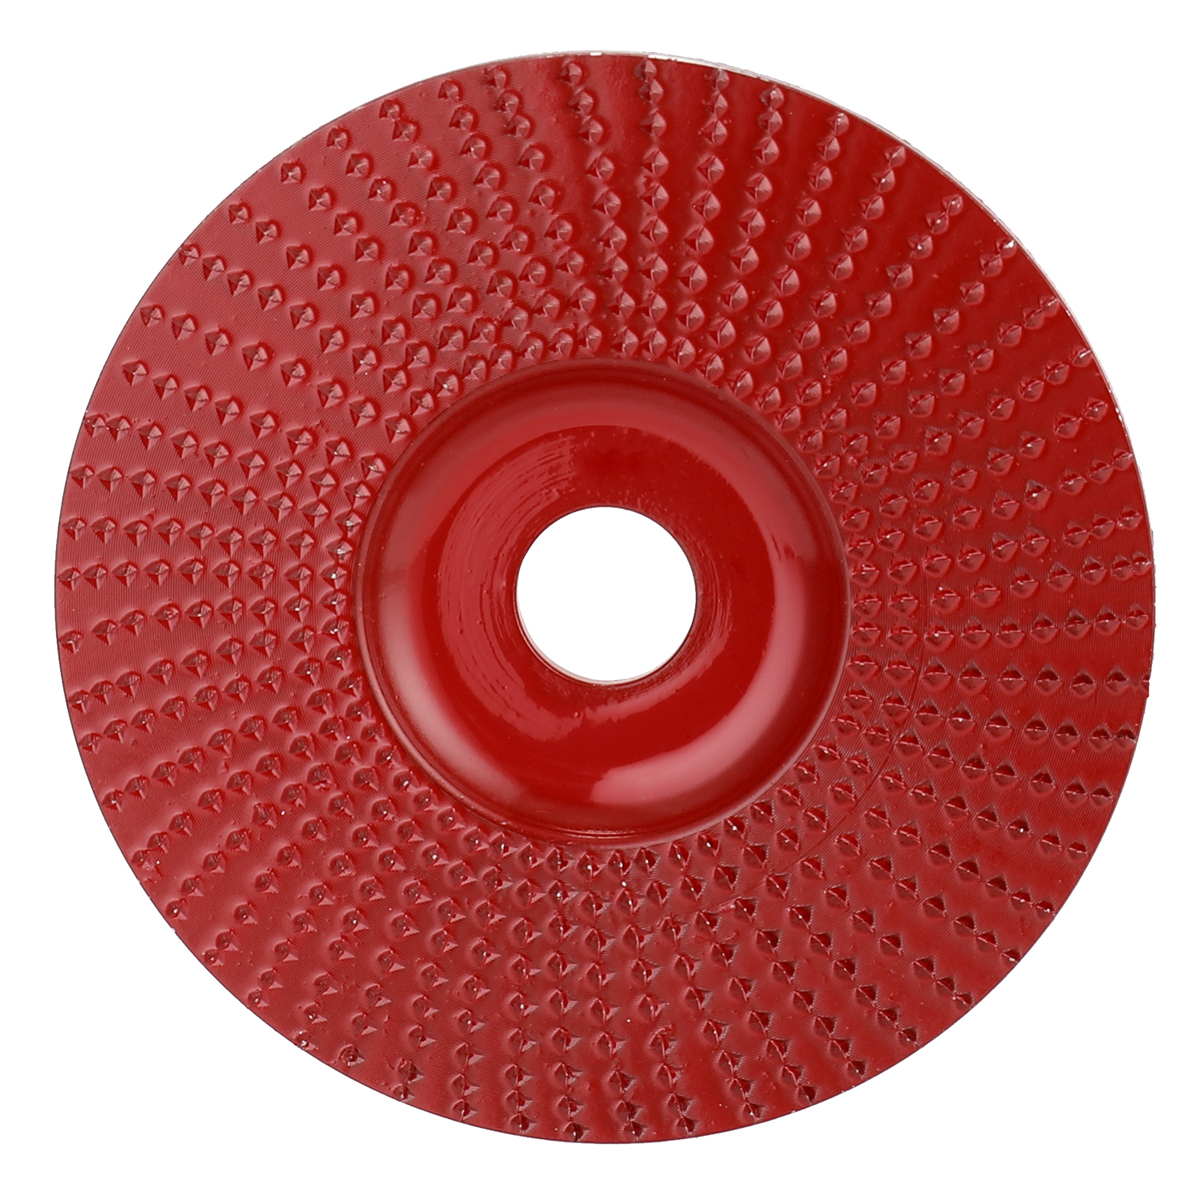 100mm Wood Grinding Wheel angle grinder disc wood carving disc Sanding Abrasive tool 16mm Bore